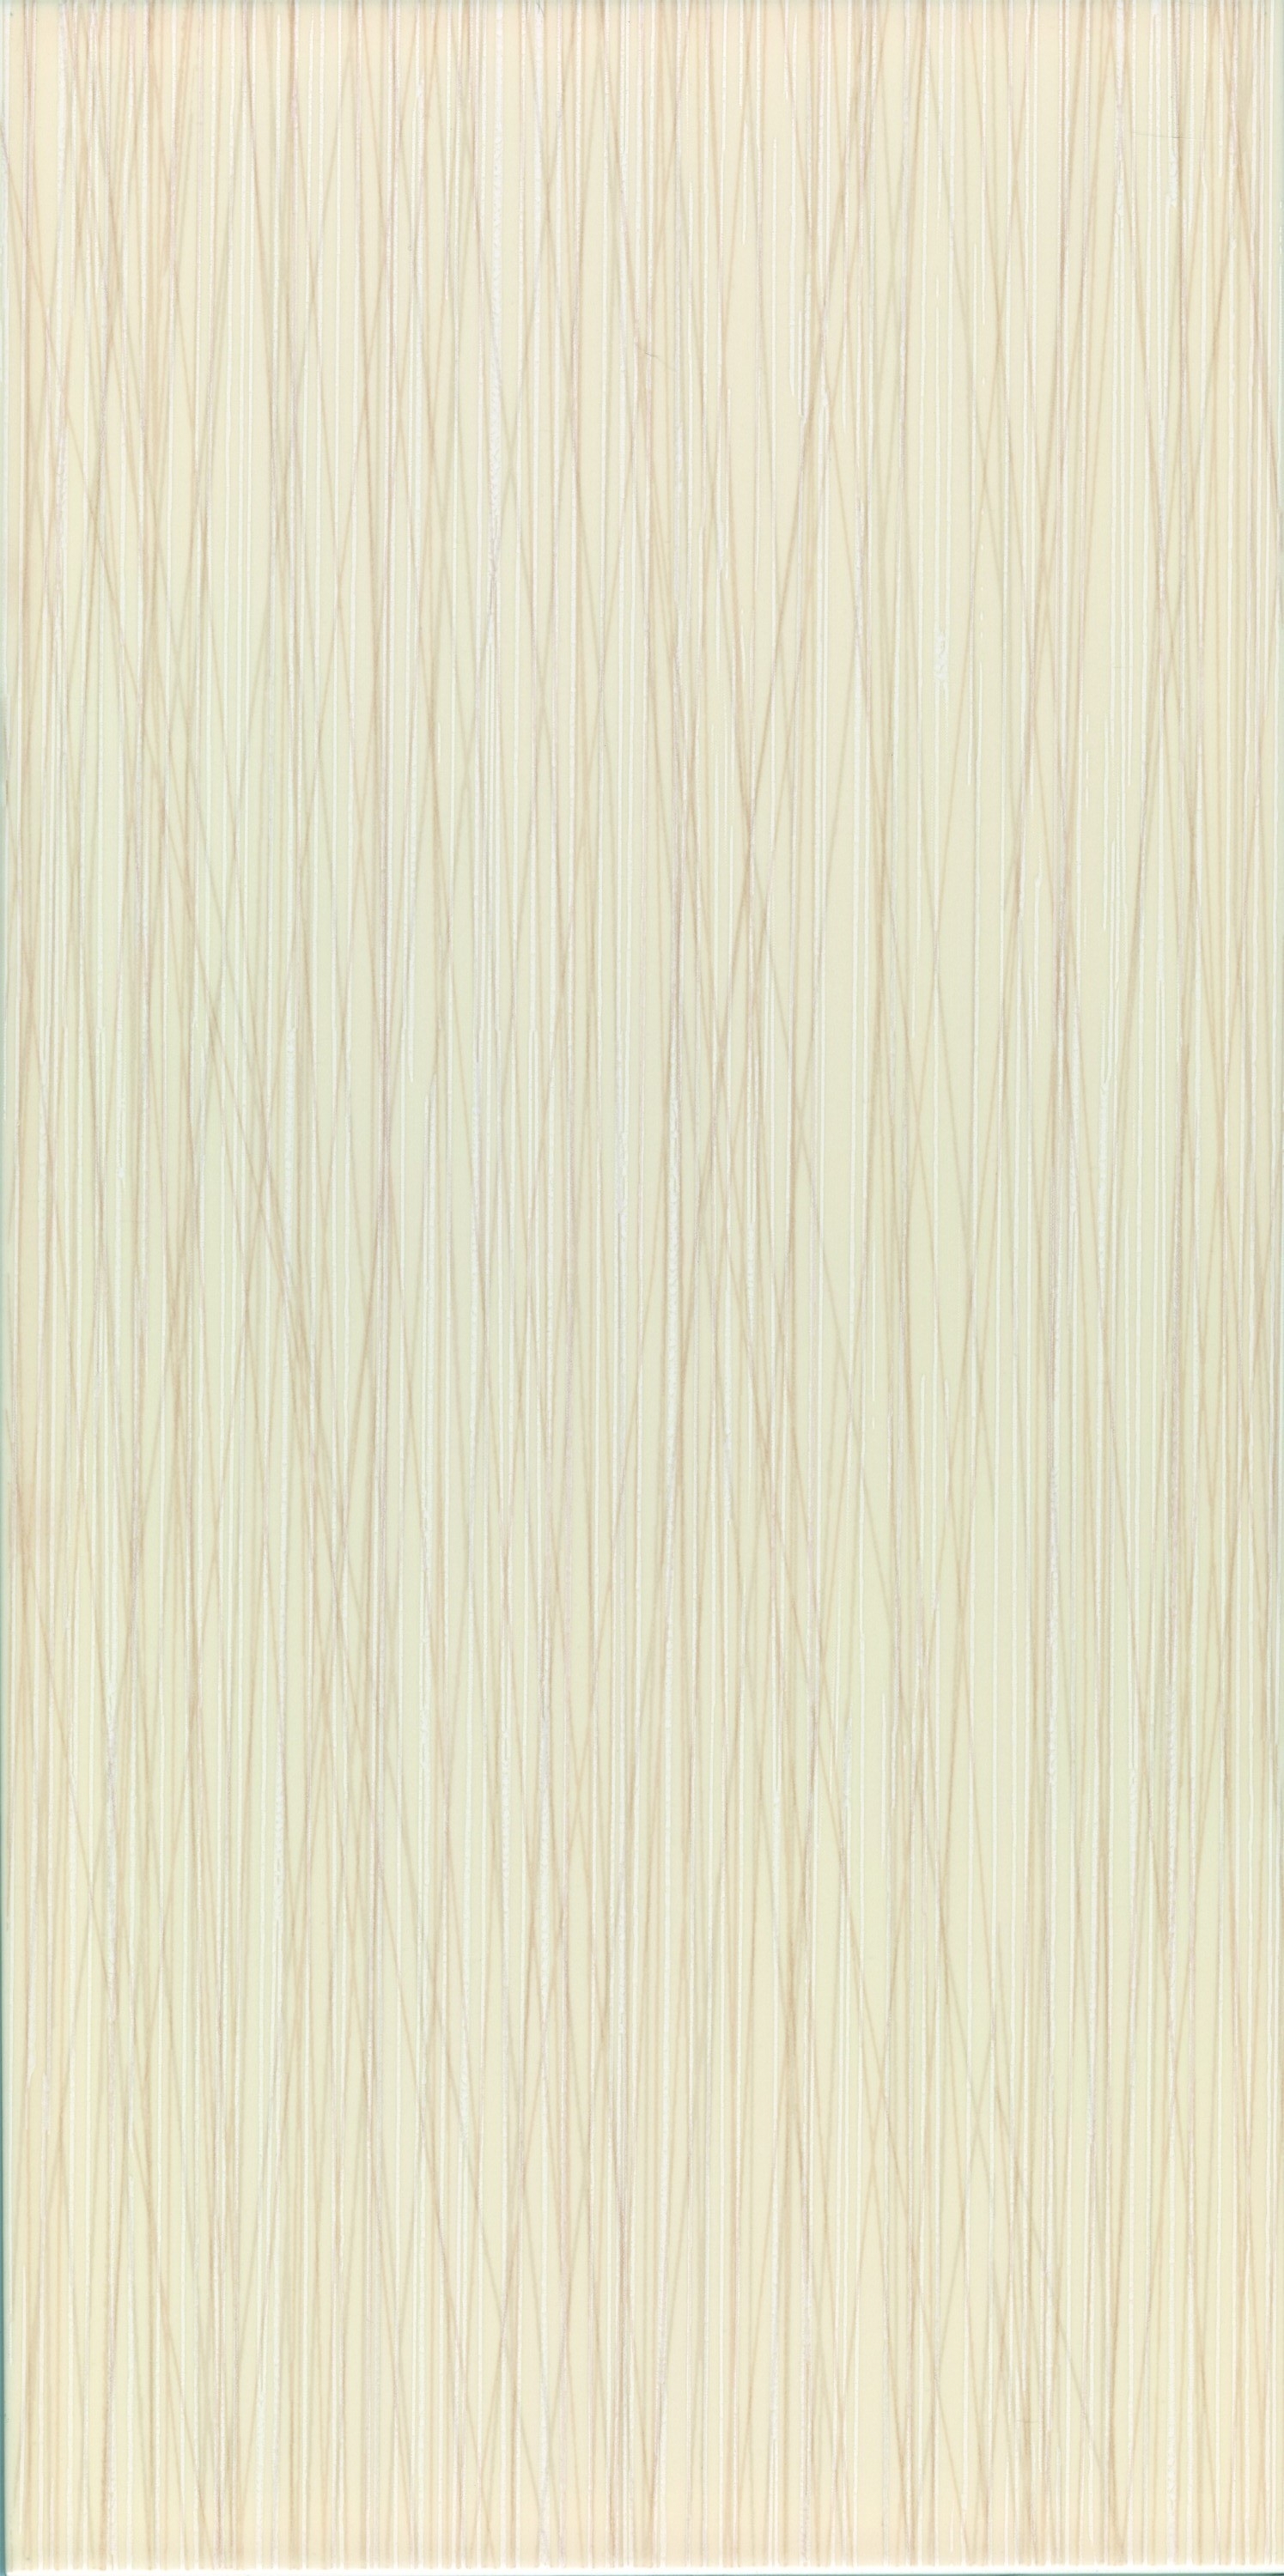 MENORCA Wandfliesen 30x60cm Beige glänzend Textiloptik